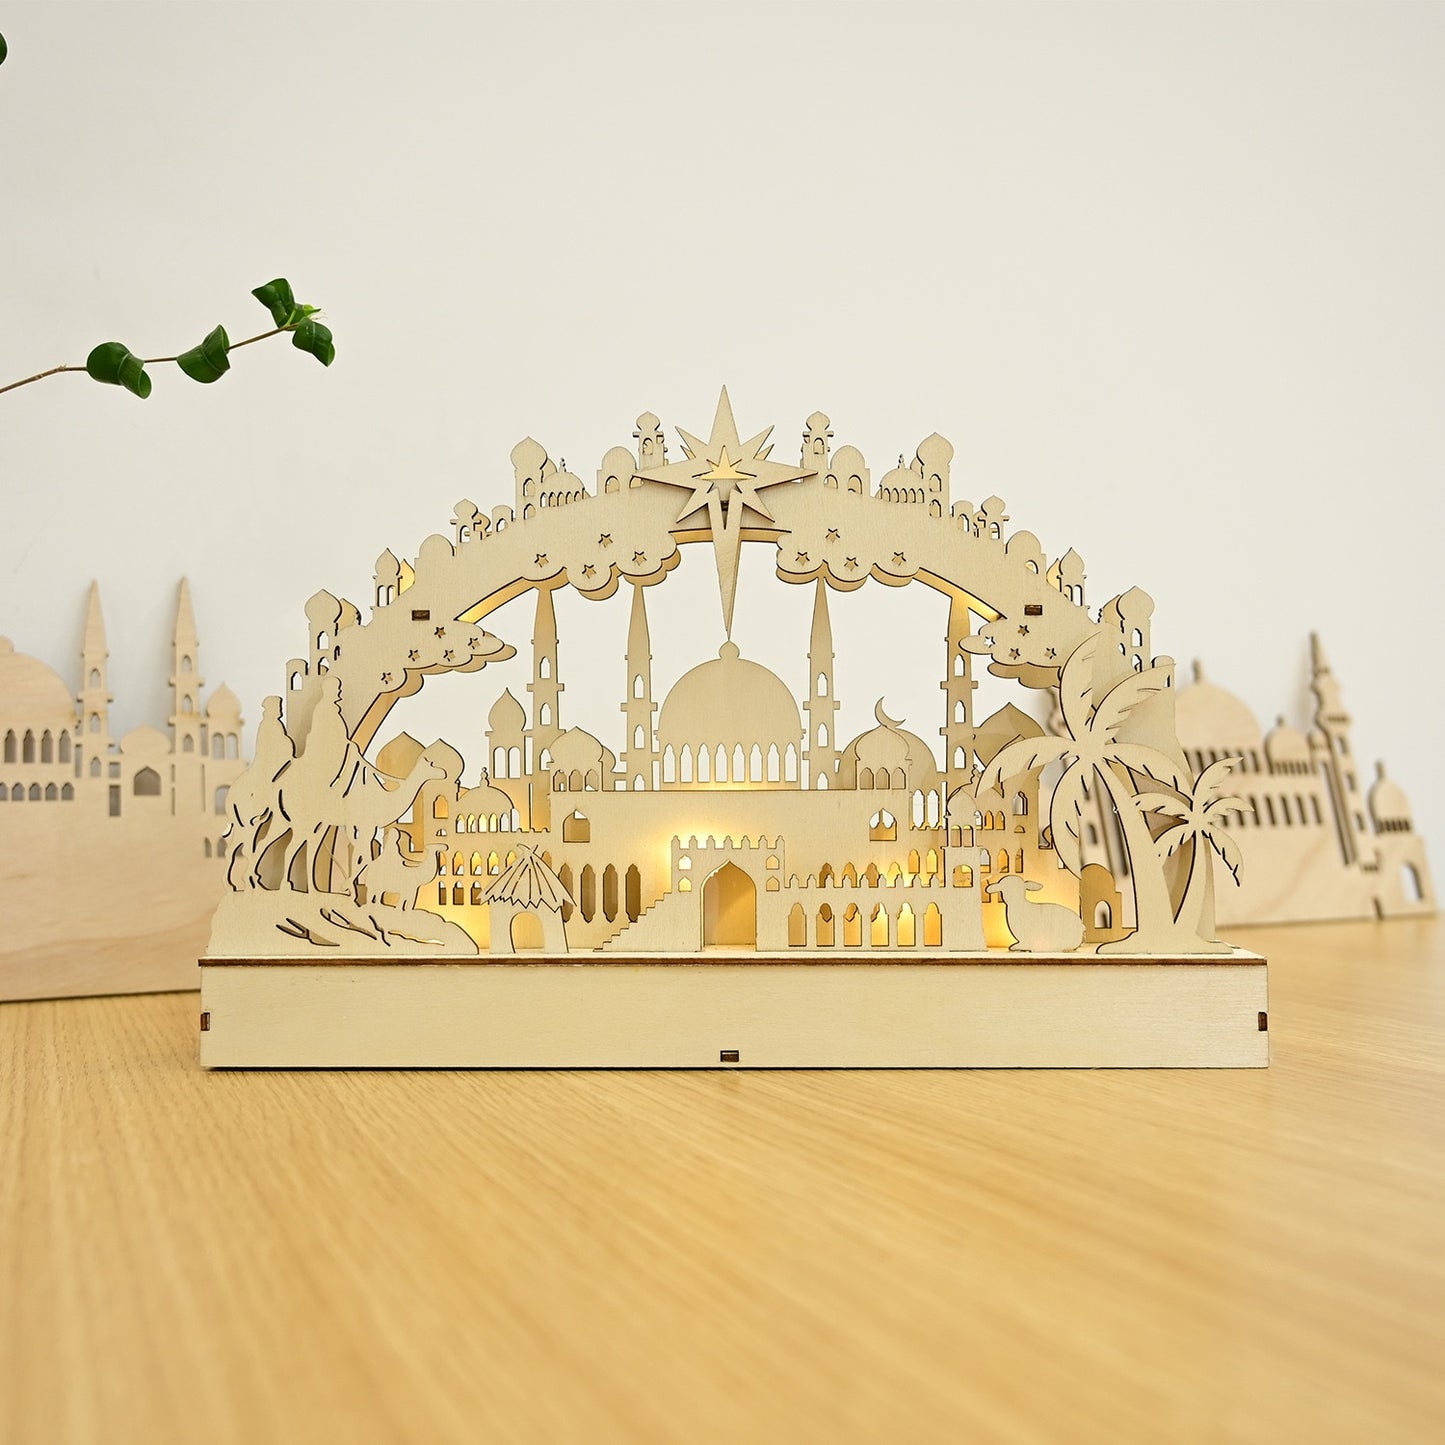 New Arrivals - Wooden Decorative Light Table Centerpiece